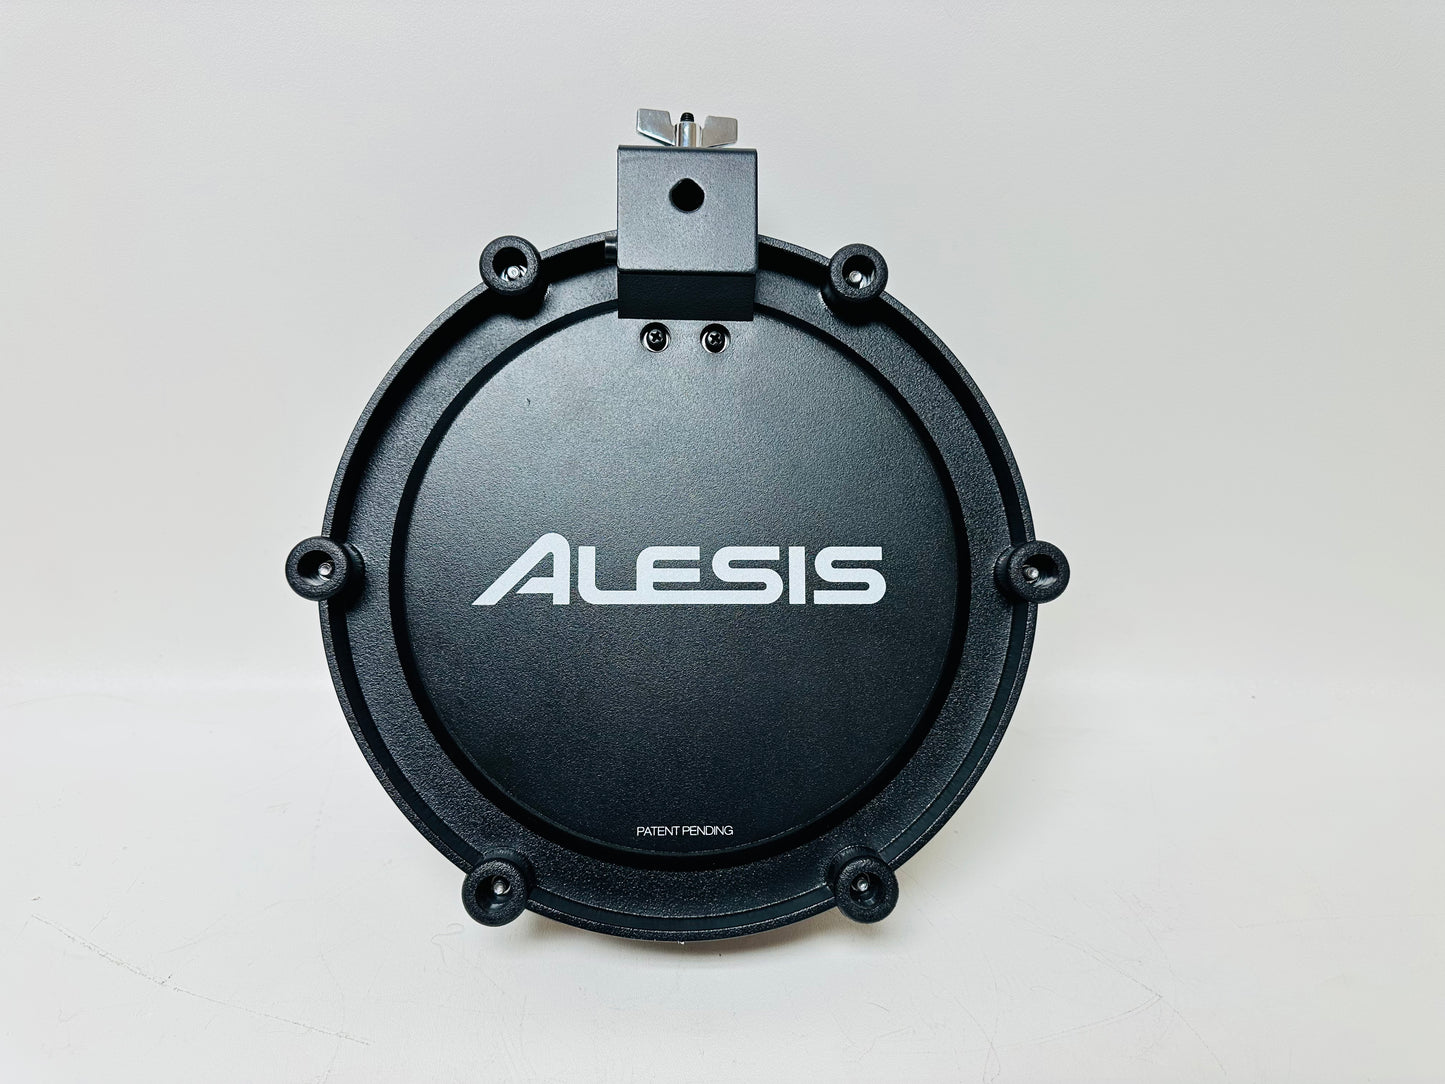 Alesis 10” DM MKii Mesh Tom Drum Pad With Drum-Tec Head w/ Clamp